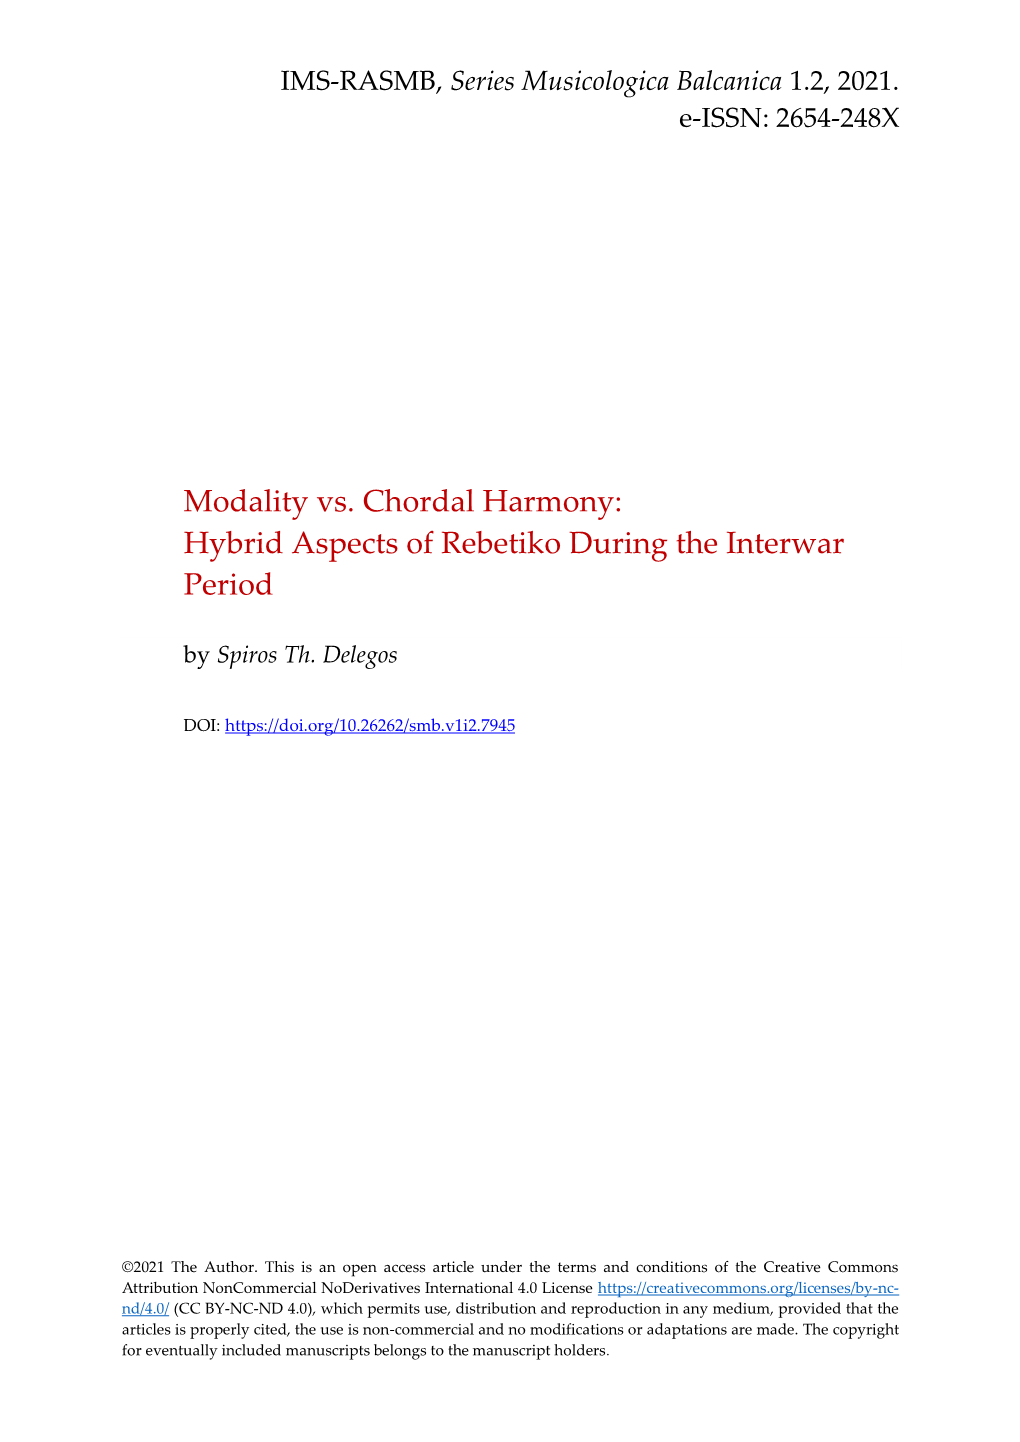 Modality Vs. Chordal Harmony: Hybrid Aspects of Rebetiko During the Interwar Period